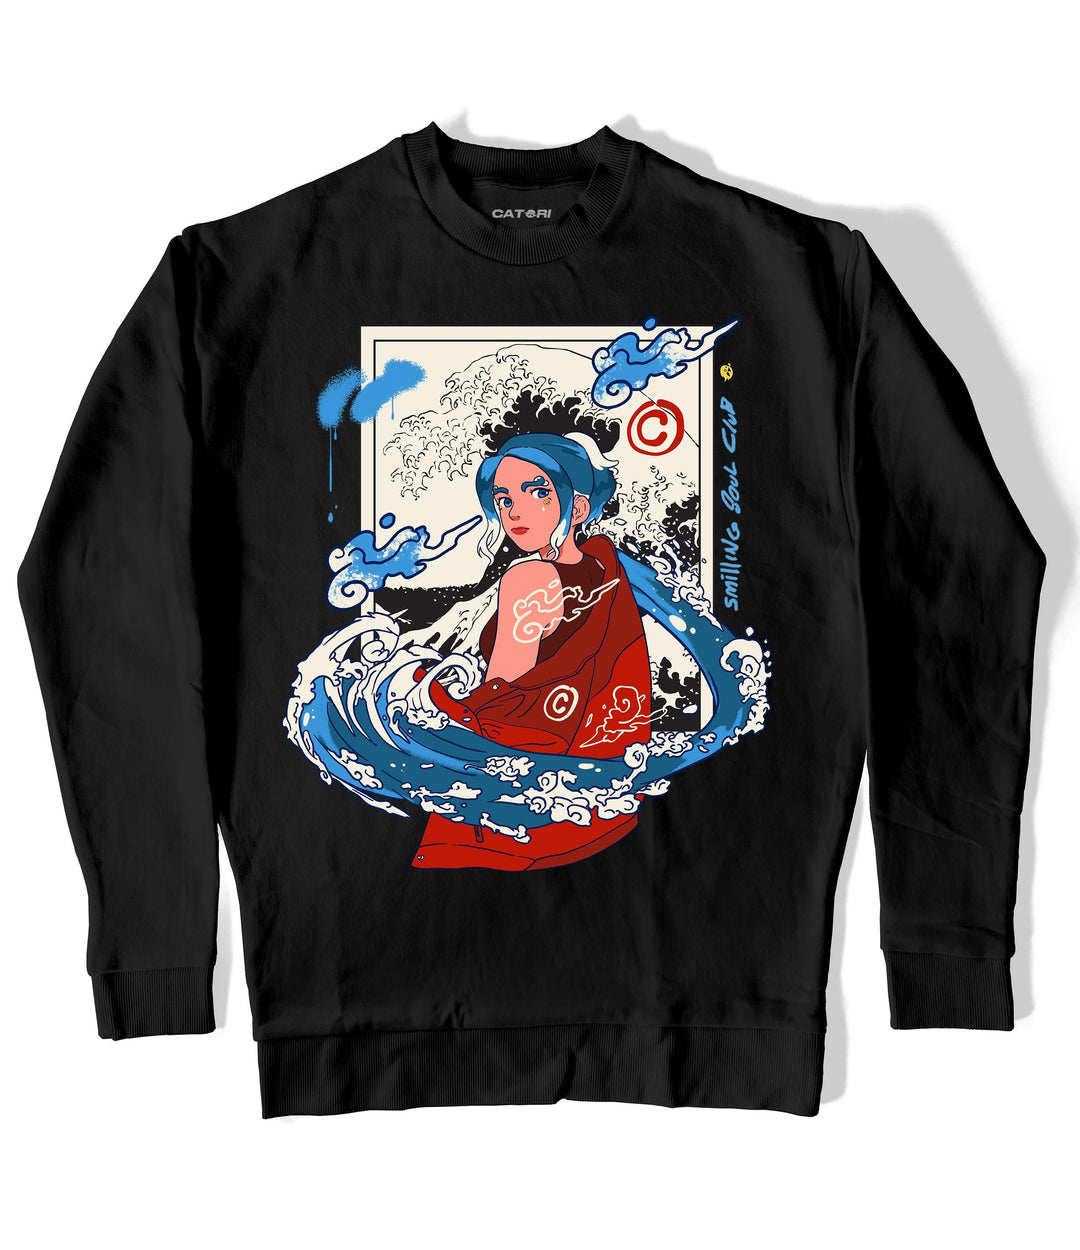 Water Element Sweatshirt at Catori Clothing | Graphic & Anime Tees, Hoodies & Sweatshirts 